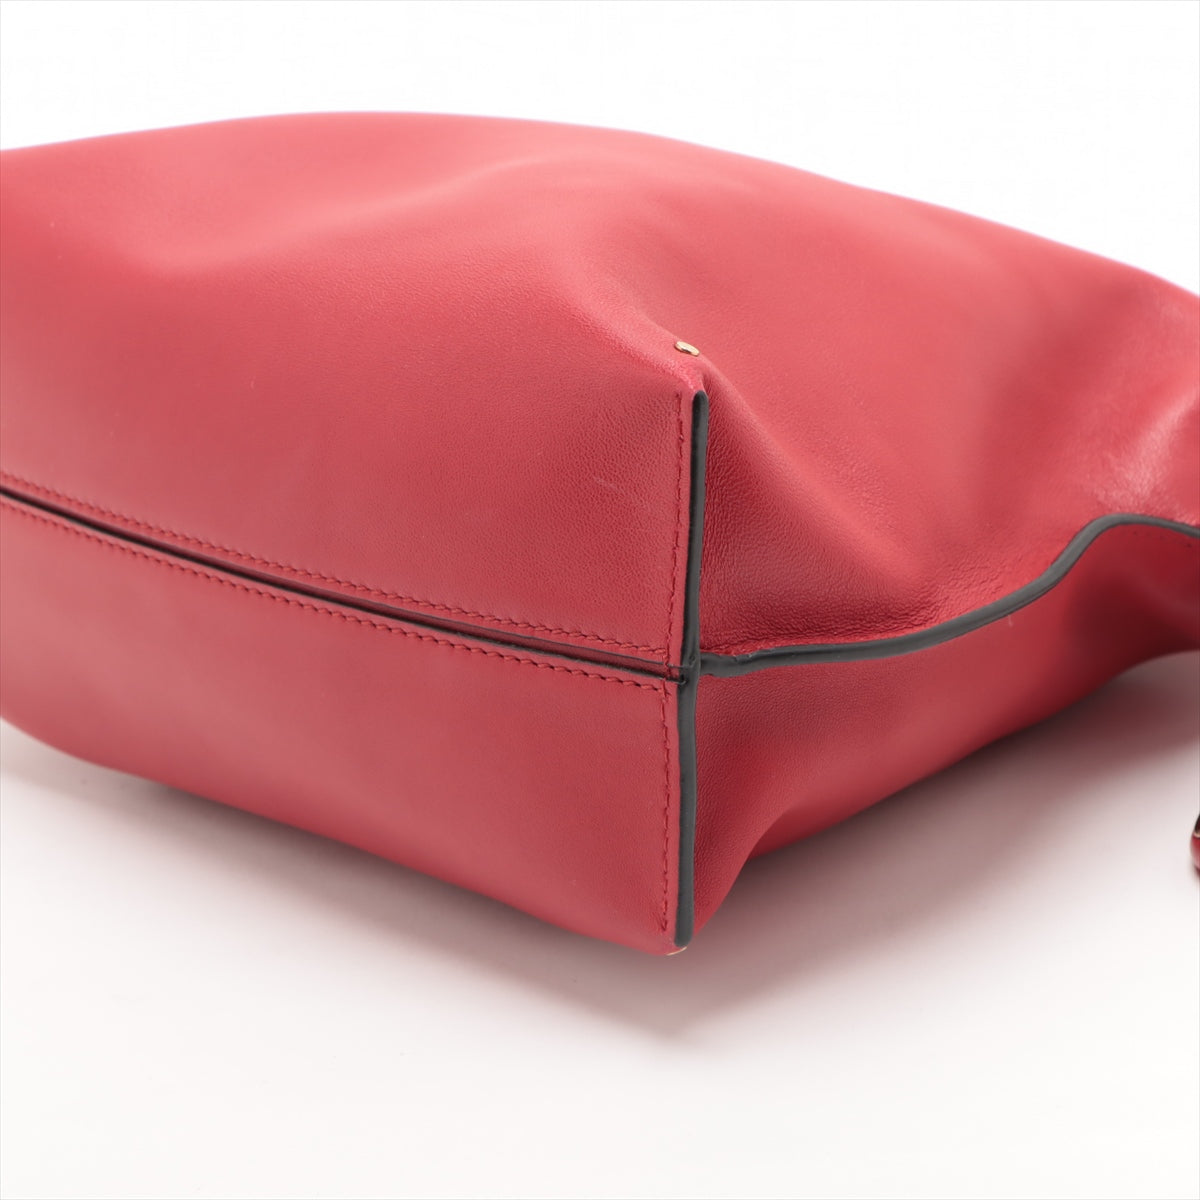 Loewe Flamenco clutch Leather Shoulder bag Red